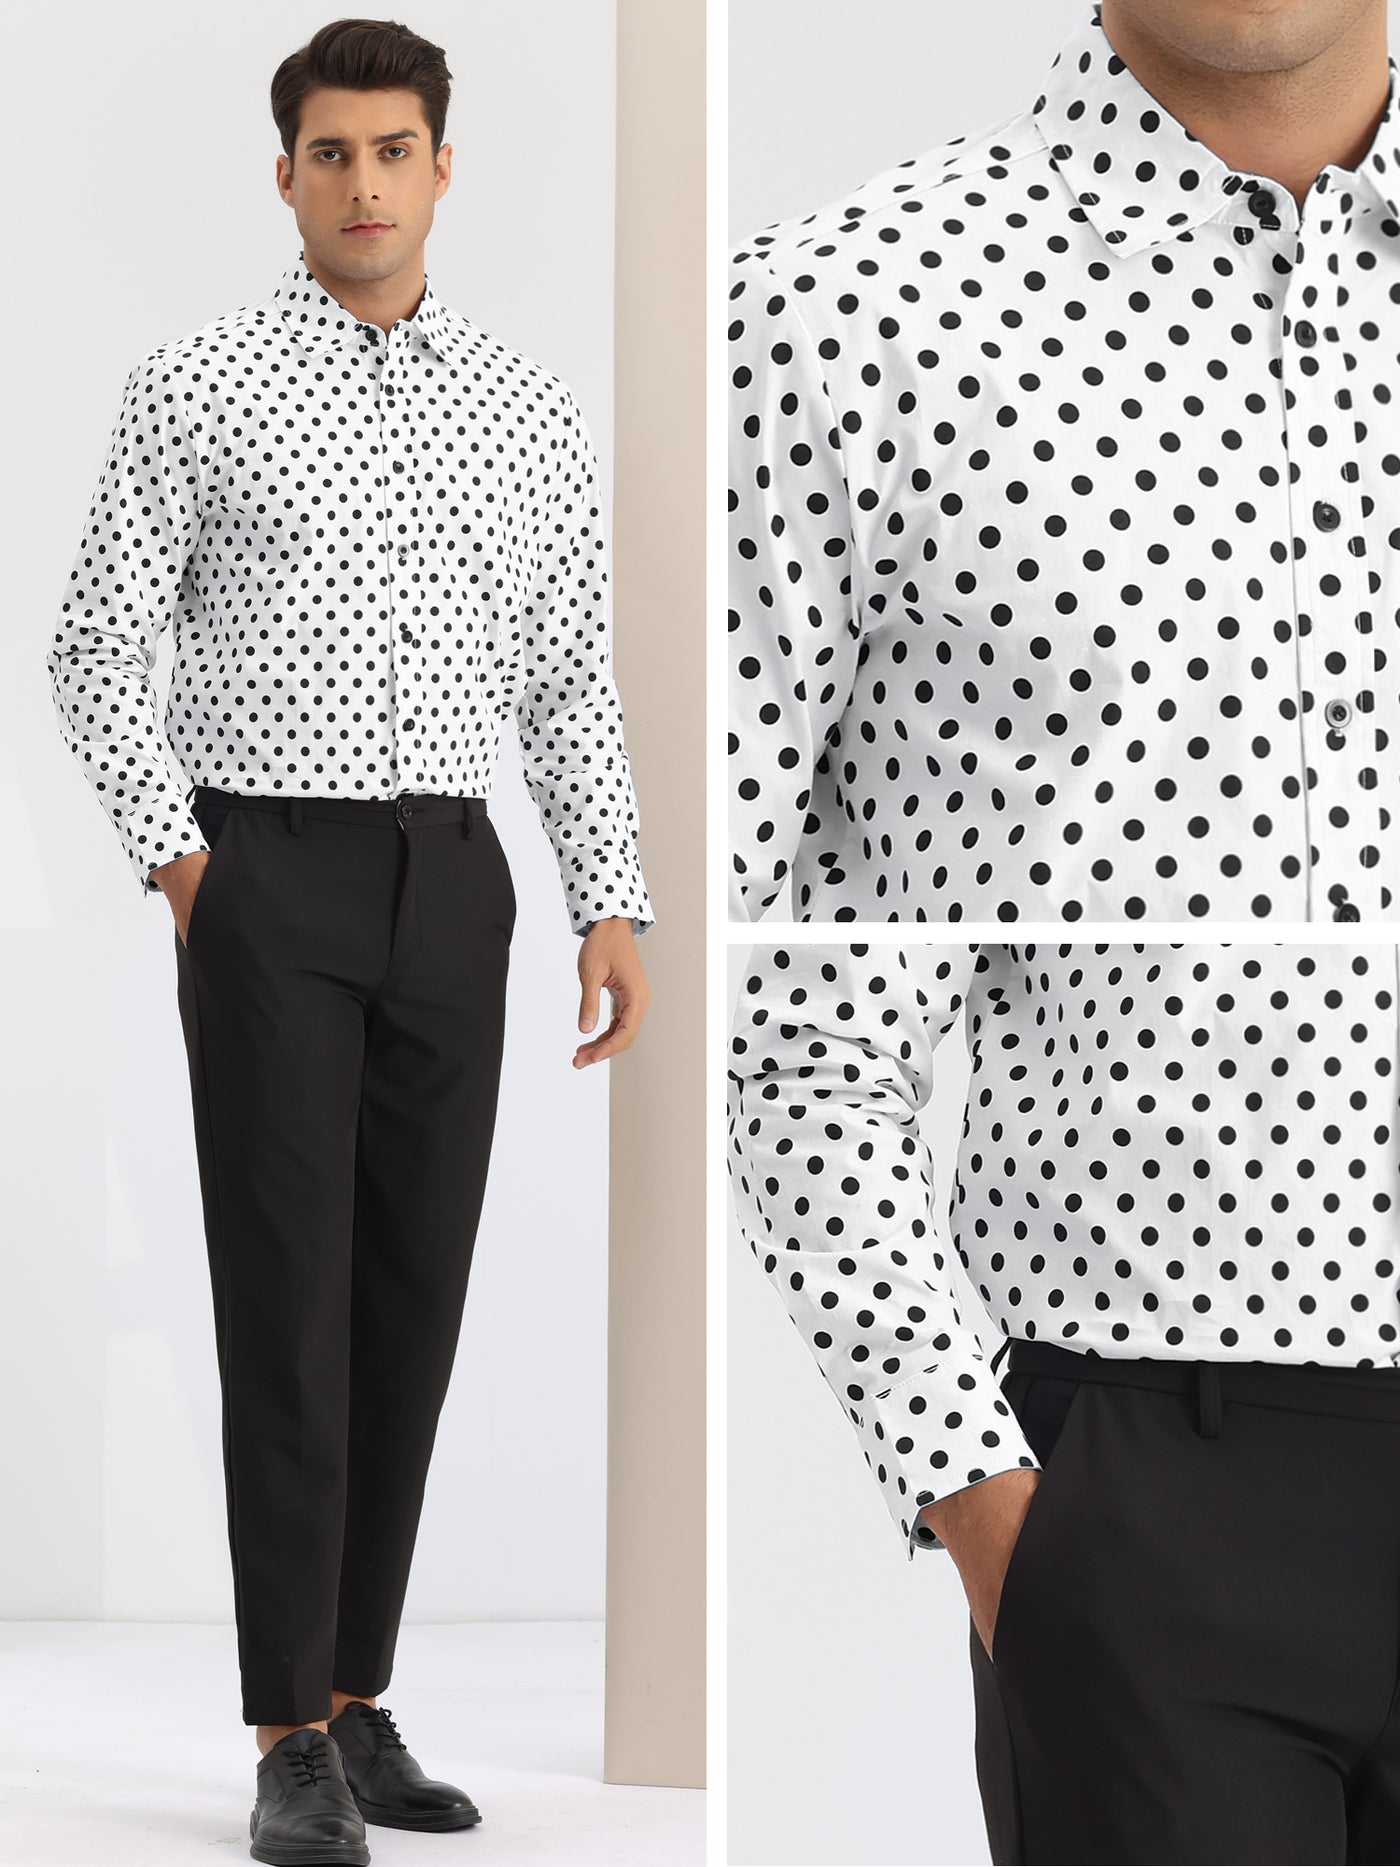 Bublédon Polka Dots Pattern Shirt for Men's Long Sleeves Color Block Business Shirts